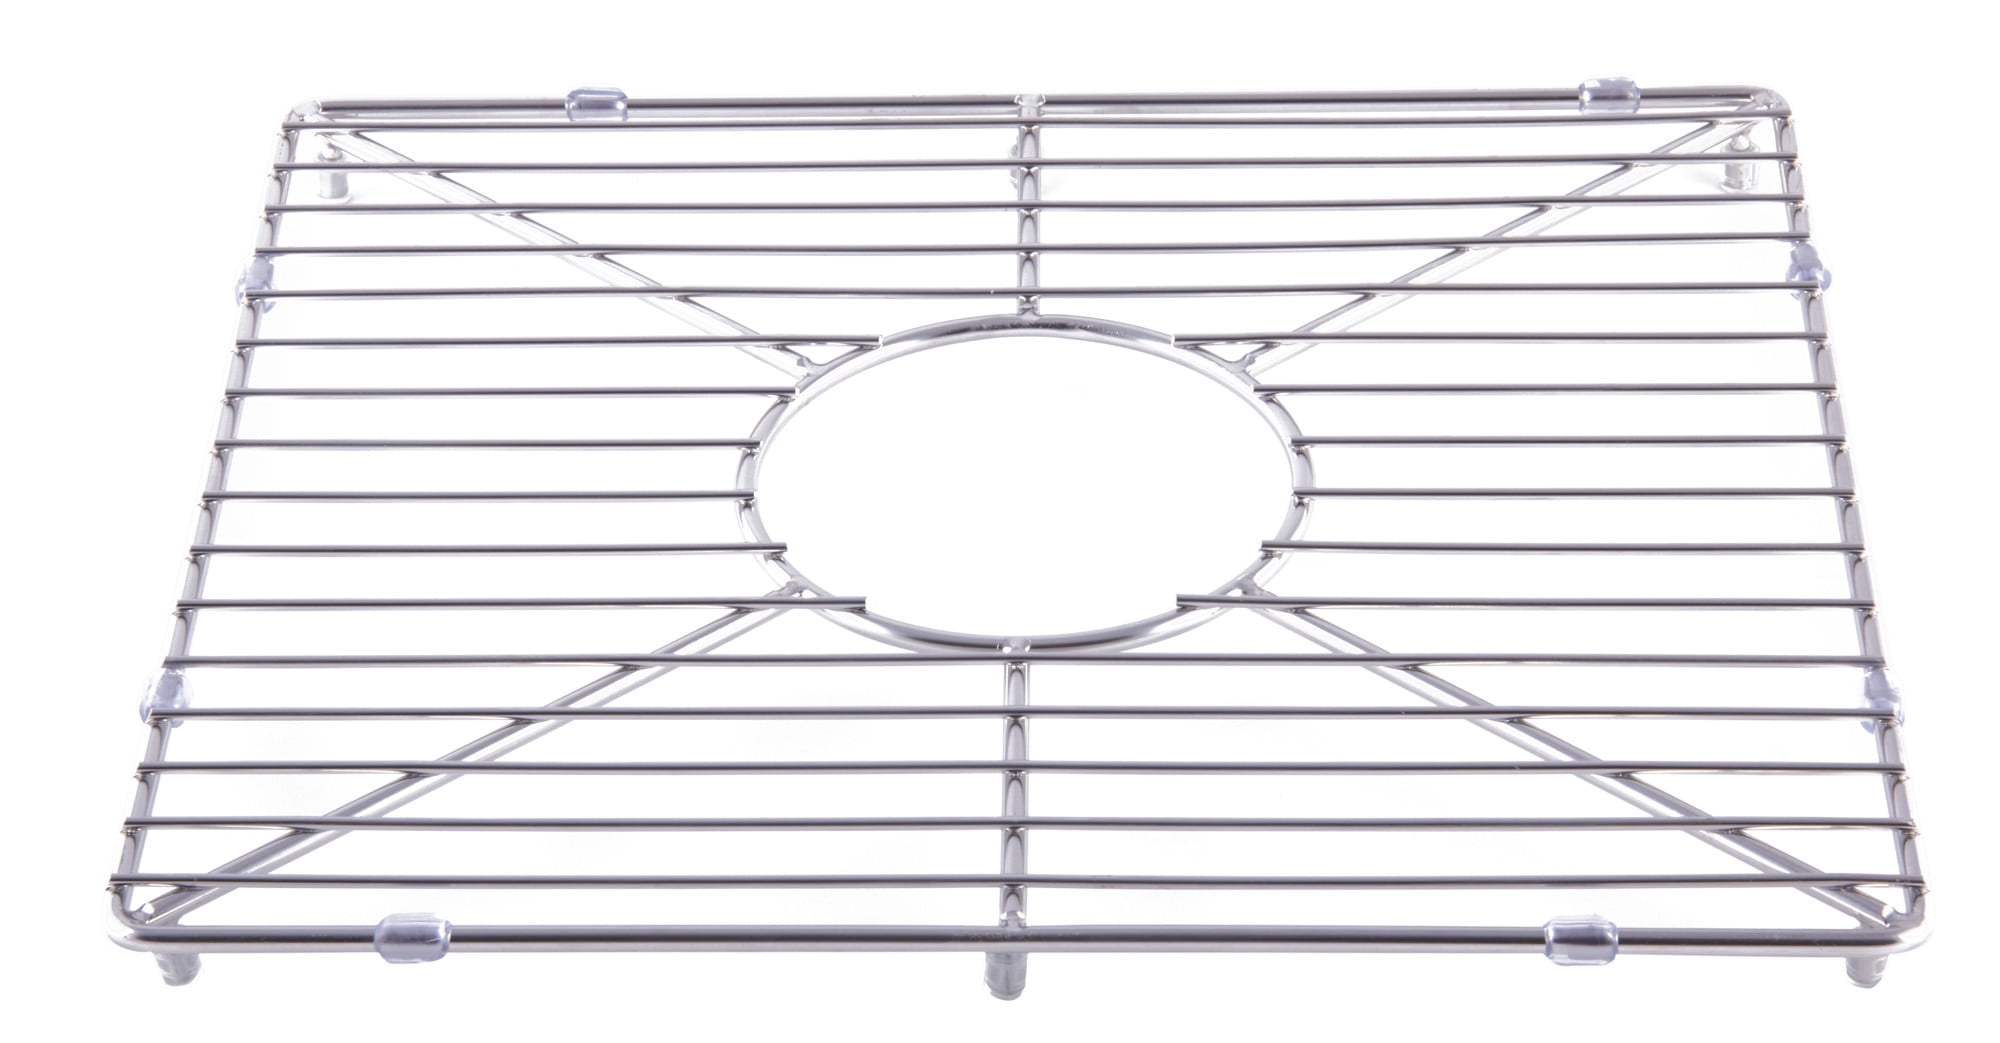 Abgr3618l Stainless Steel Kitchen Sink Grid For Large Side